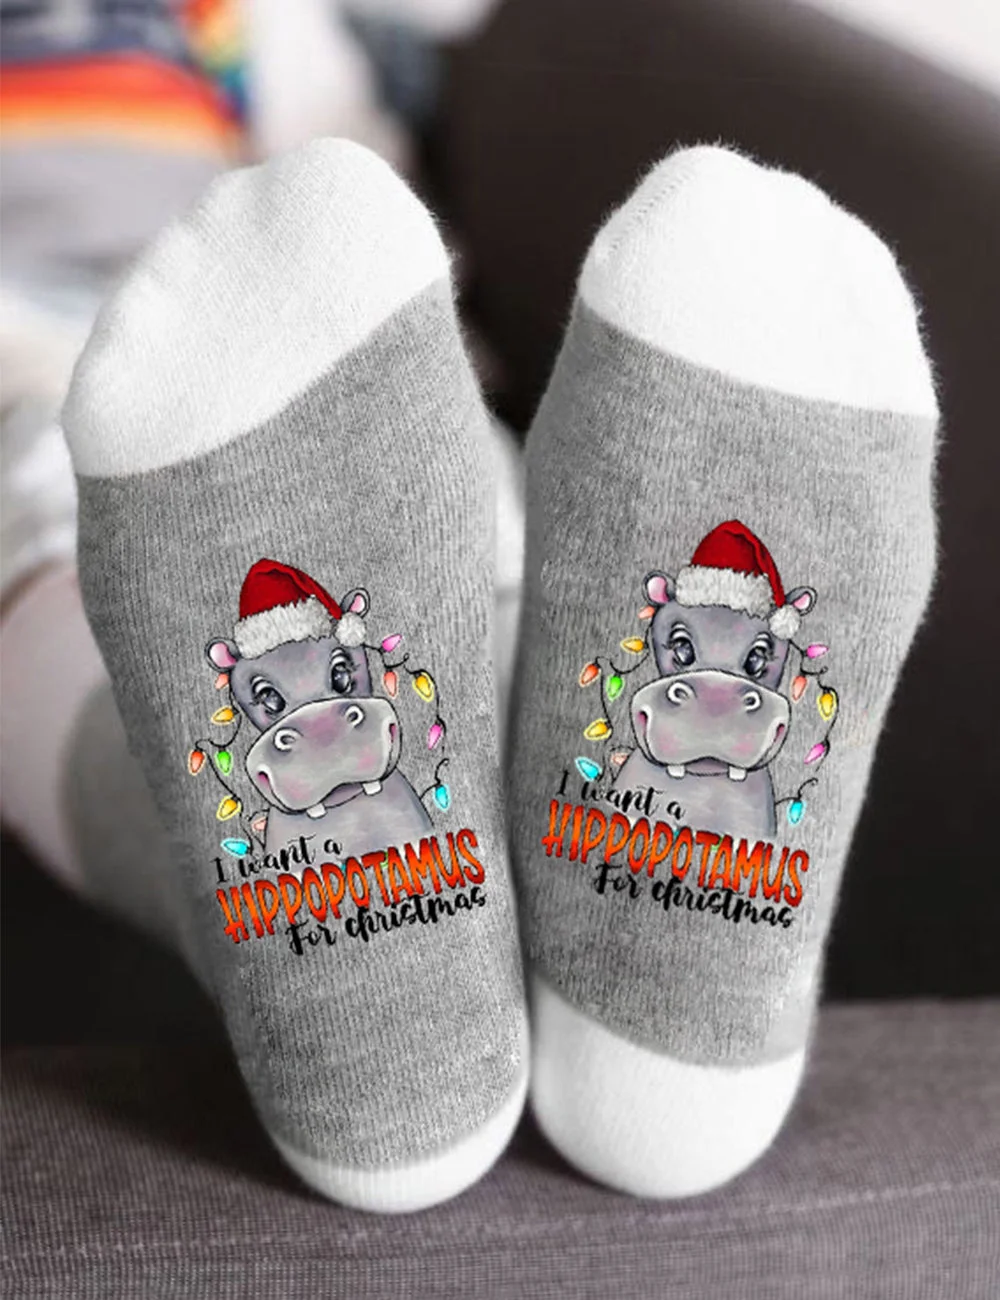 Lizzic I Want A Hippopotamus For Christmas Socks